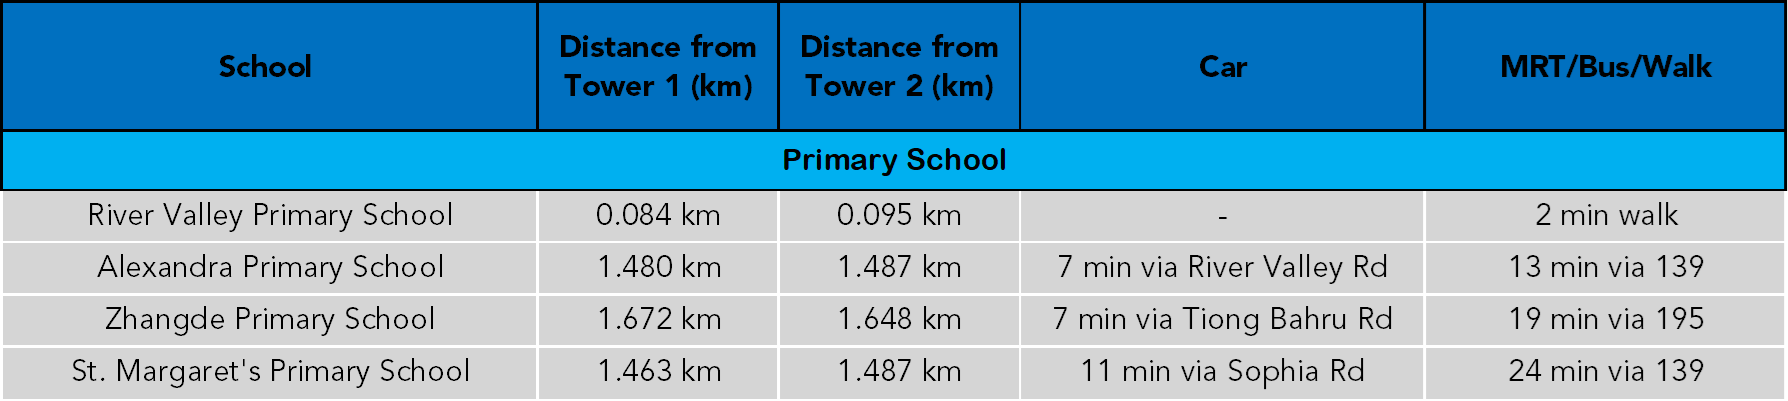 TheAvenir Pri School - separate distances Table.png